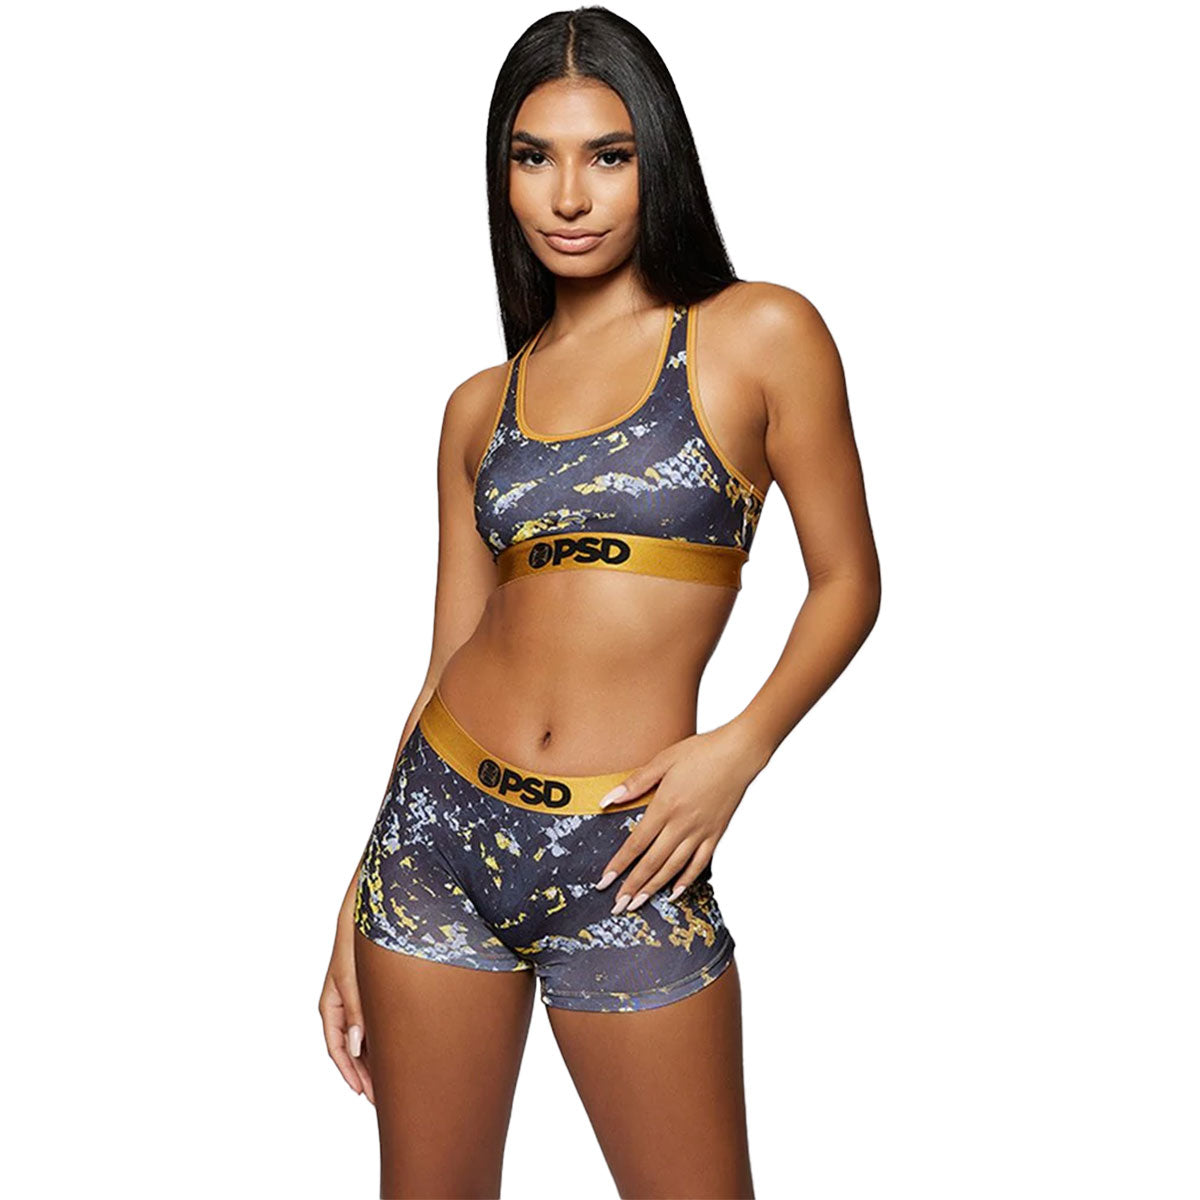 PSD Golden Scales Sports Bra Women's Top Underwear-3214T1005